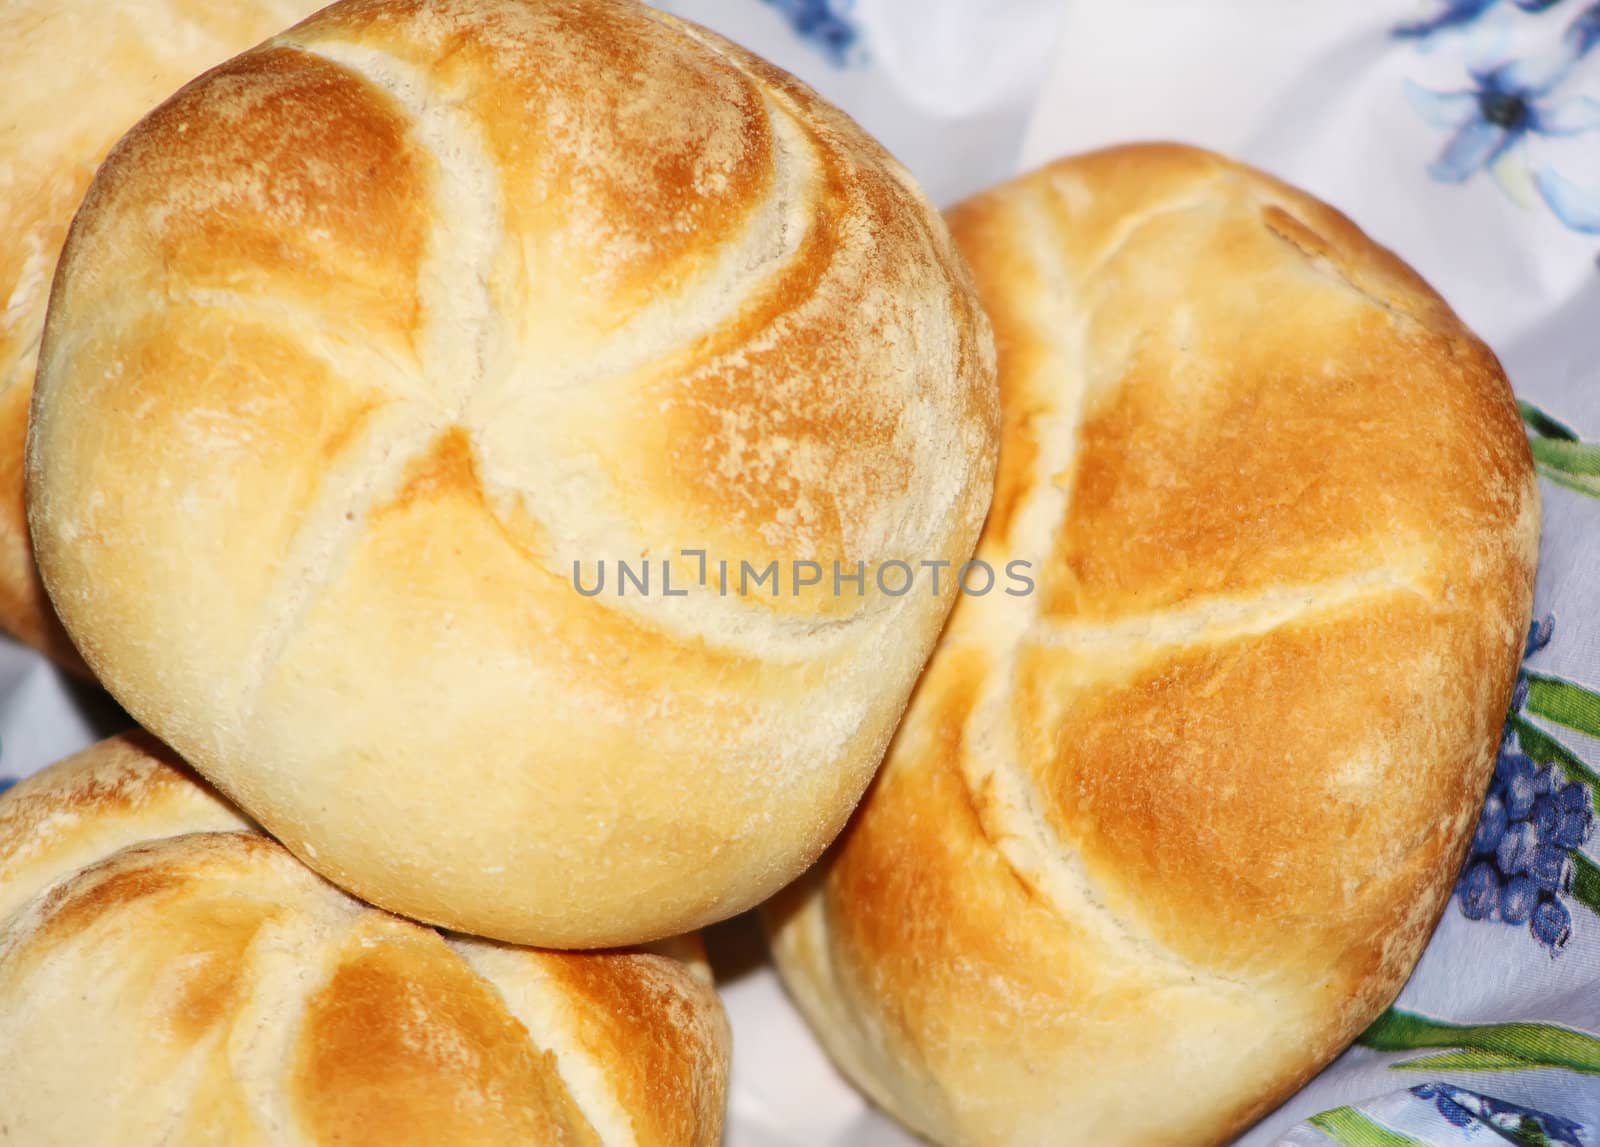 Fresh baked rolls by piotrek73